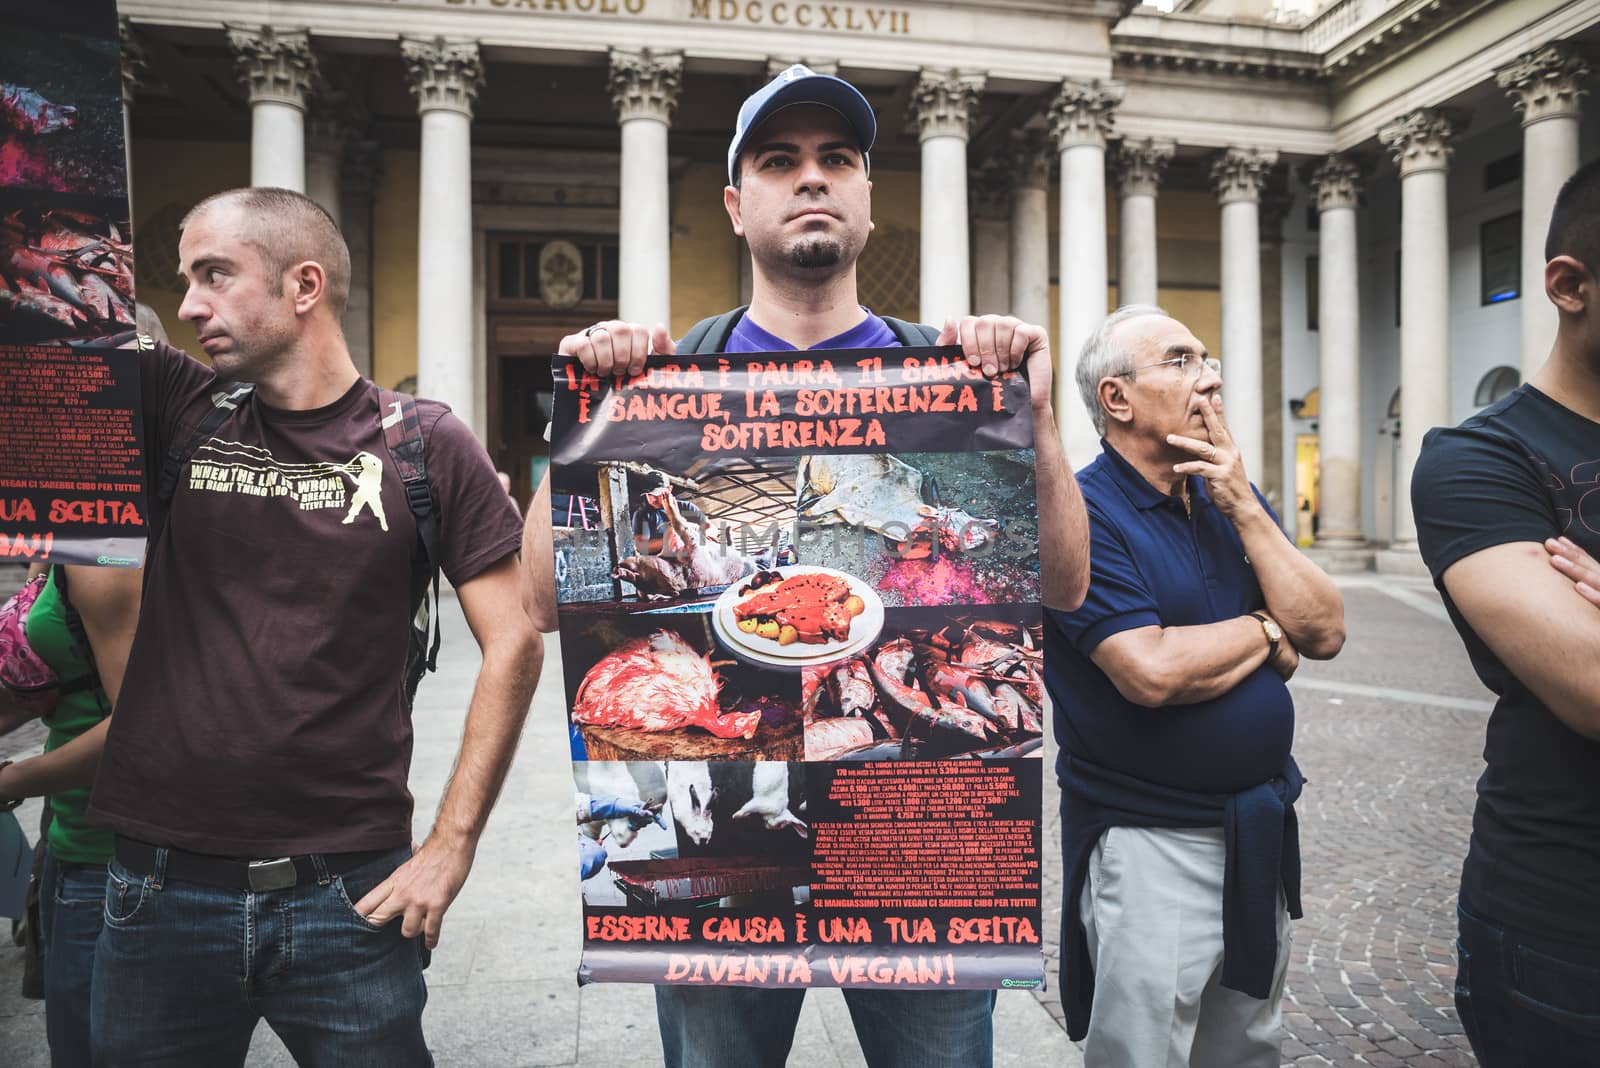 269 life manifestation in Milan on September, 26 2013 by peus